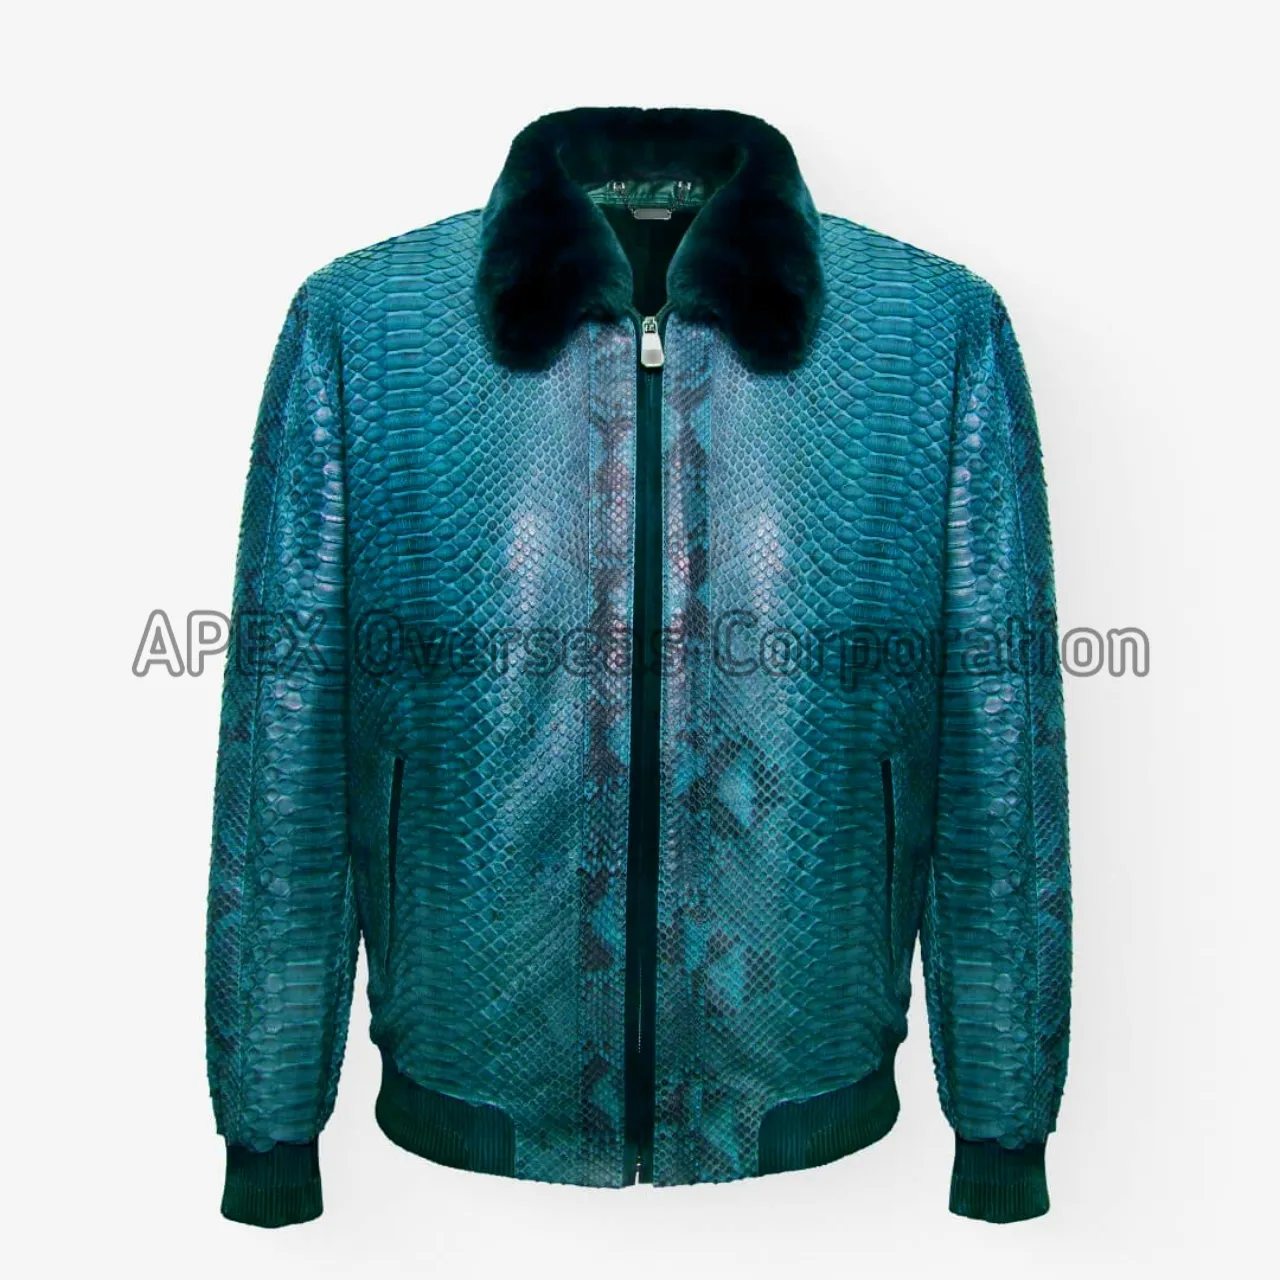 Python Skin Men's Jacket Real Snake Skin Fur Collar 100% Handmade Men Sheepskin Leather Jacket With Embossed Snake Skin Texture